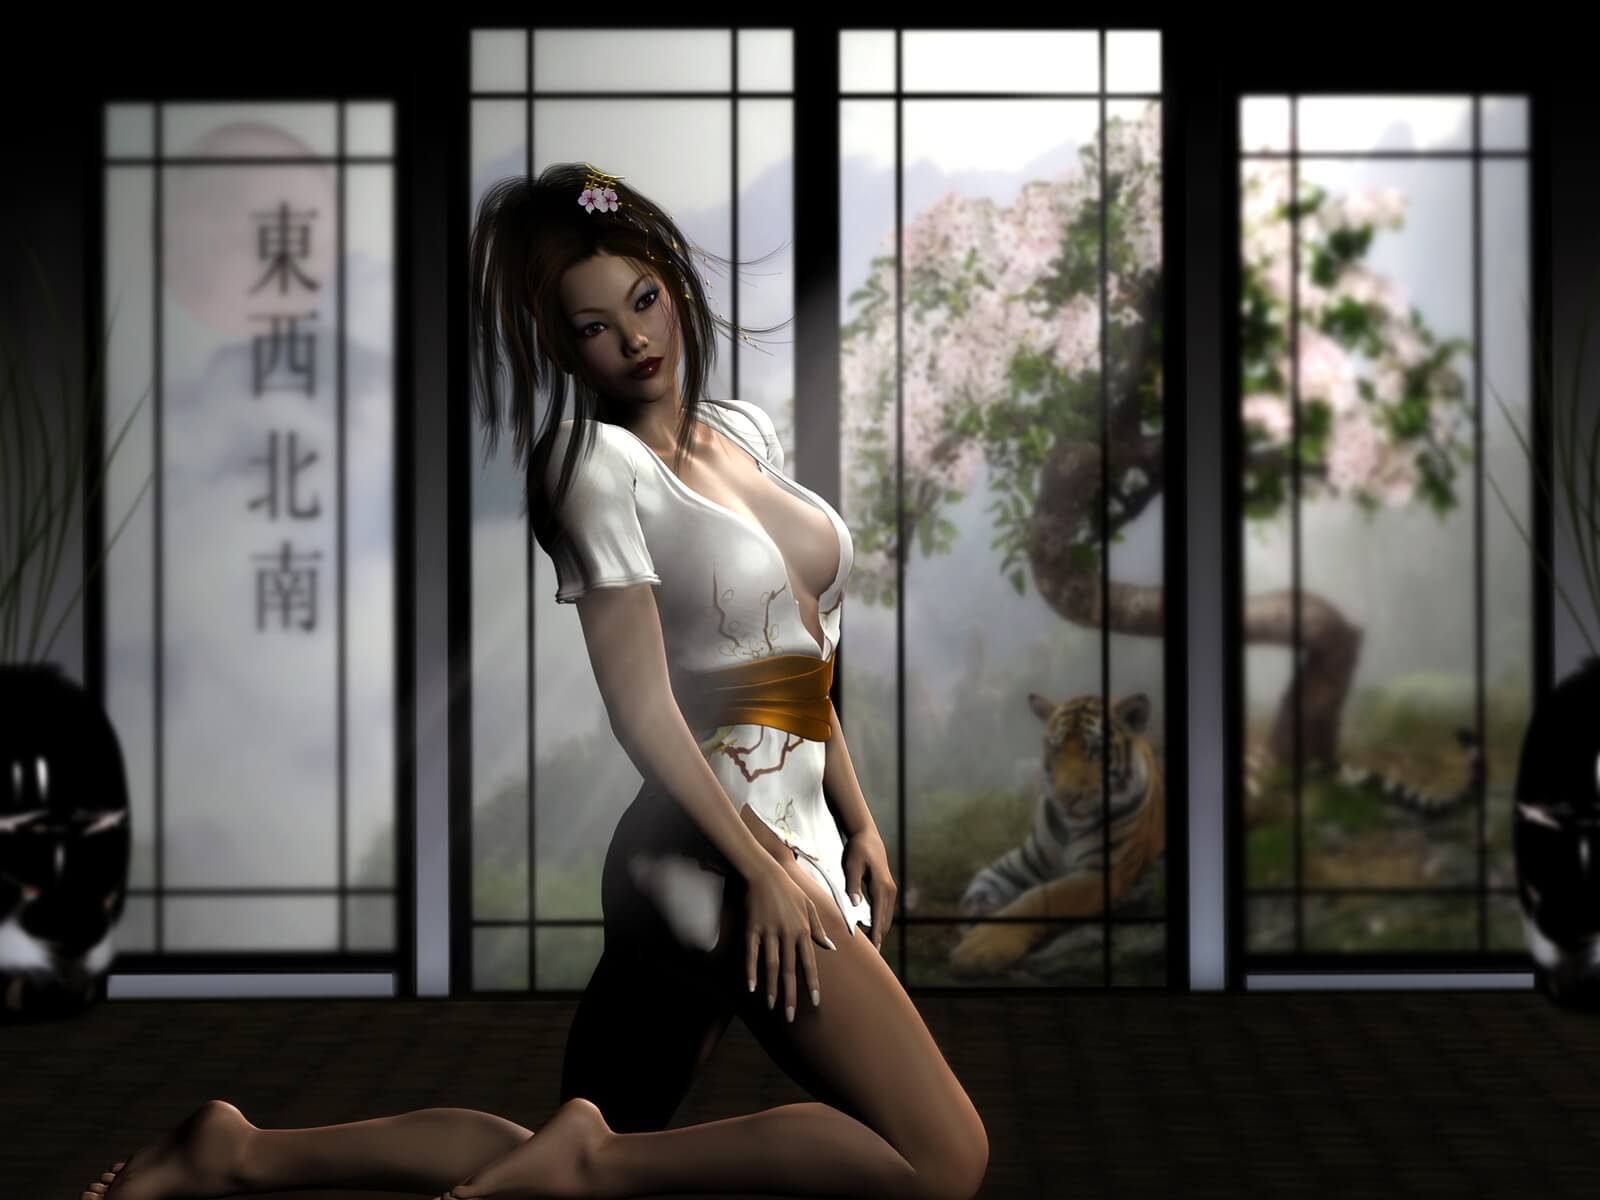 Vlies Tapete Poster Fototapete Fantasy Geisha Tiger